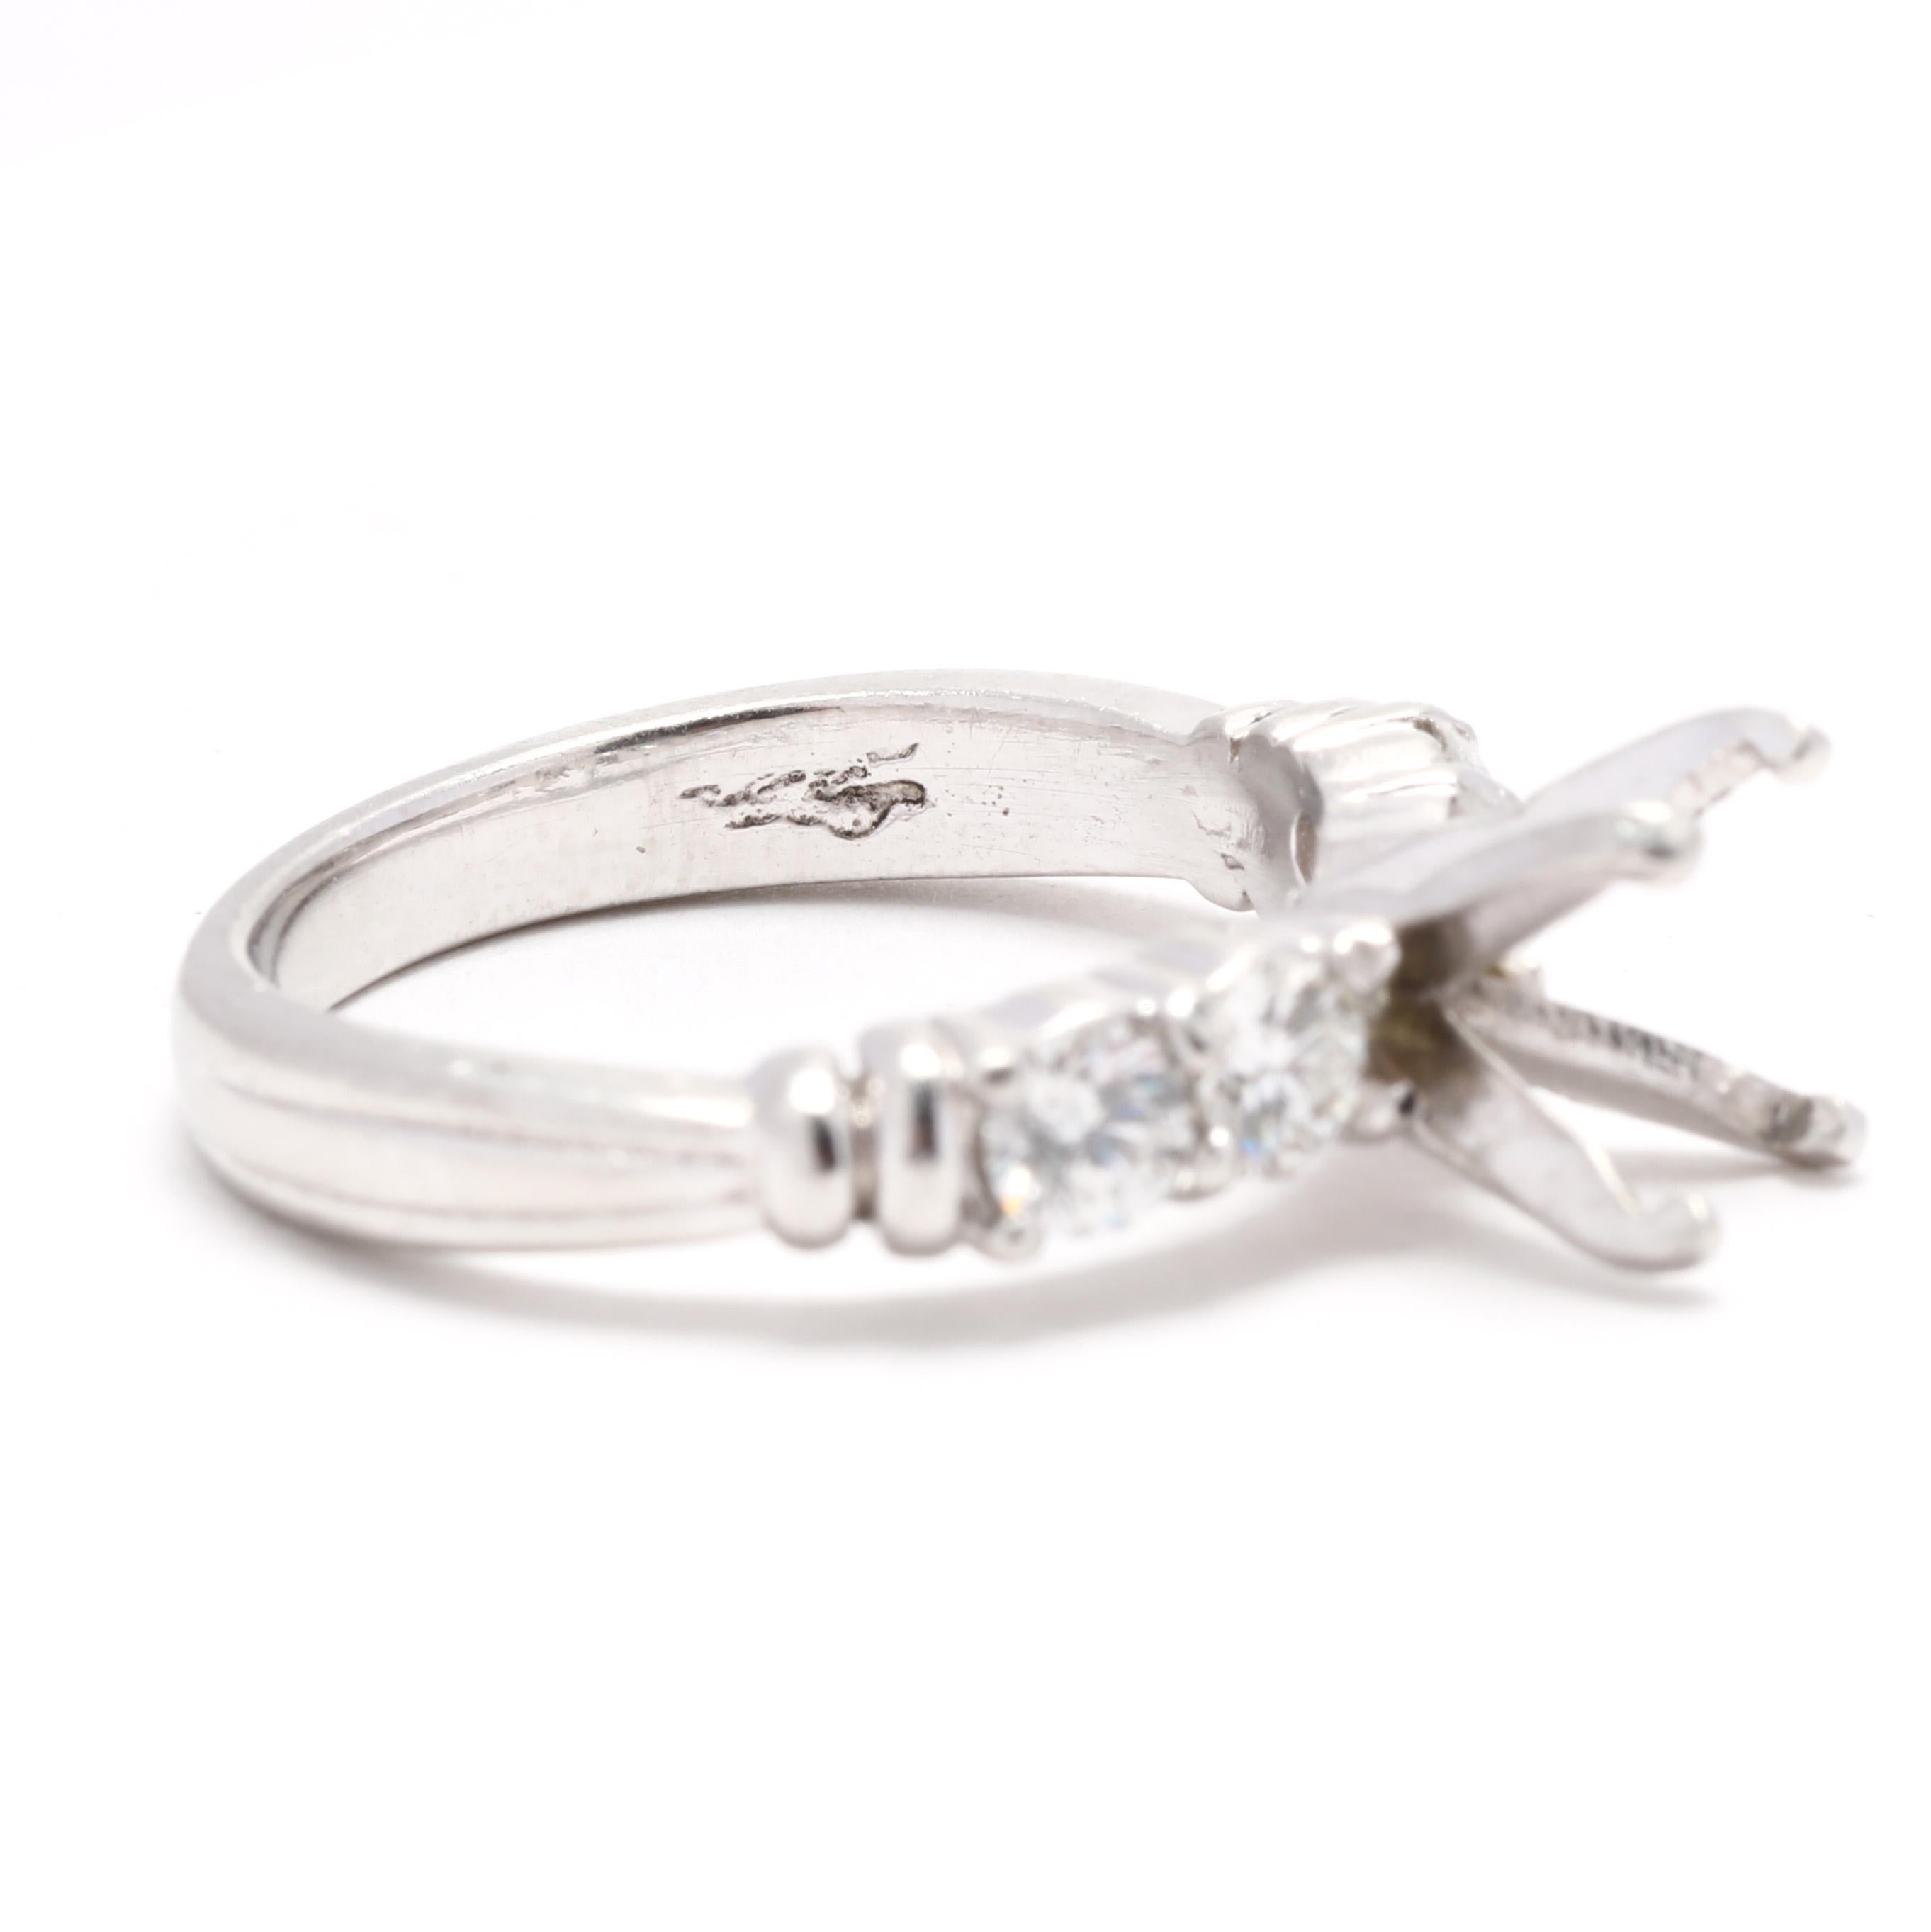 Brilliant Cut Diamond Engagement Ring Mounting, Platinum, 1ct Diamond